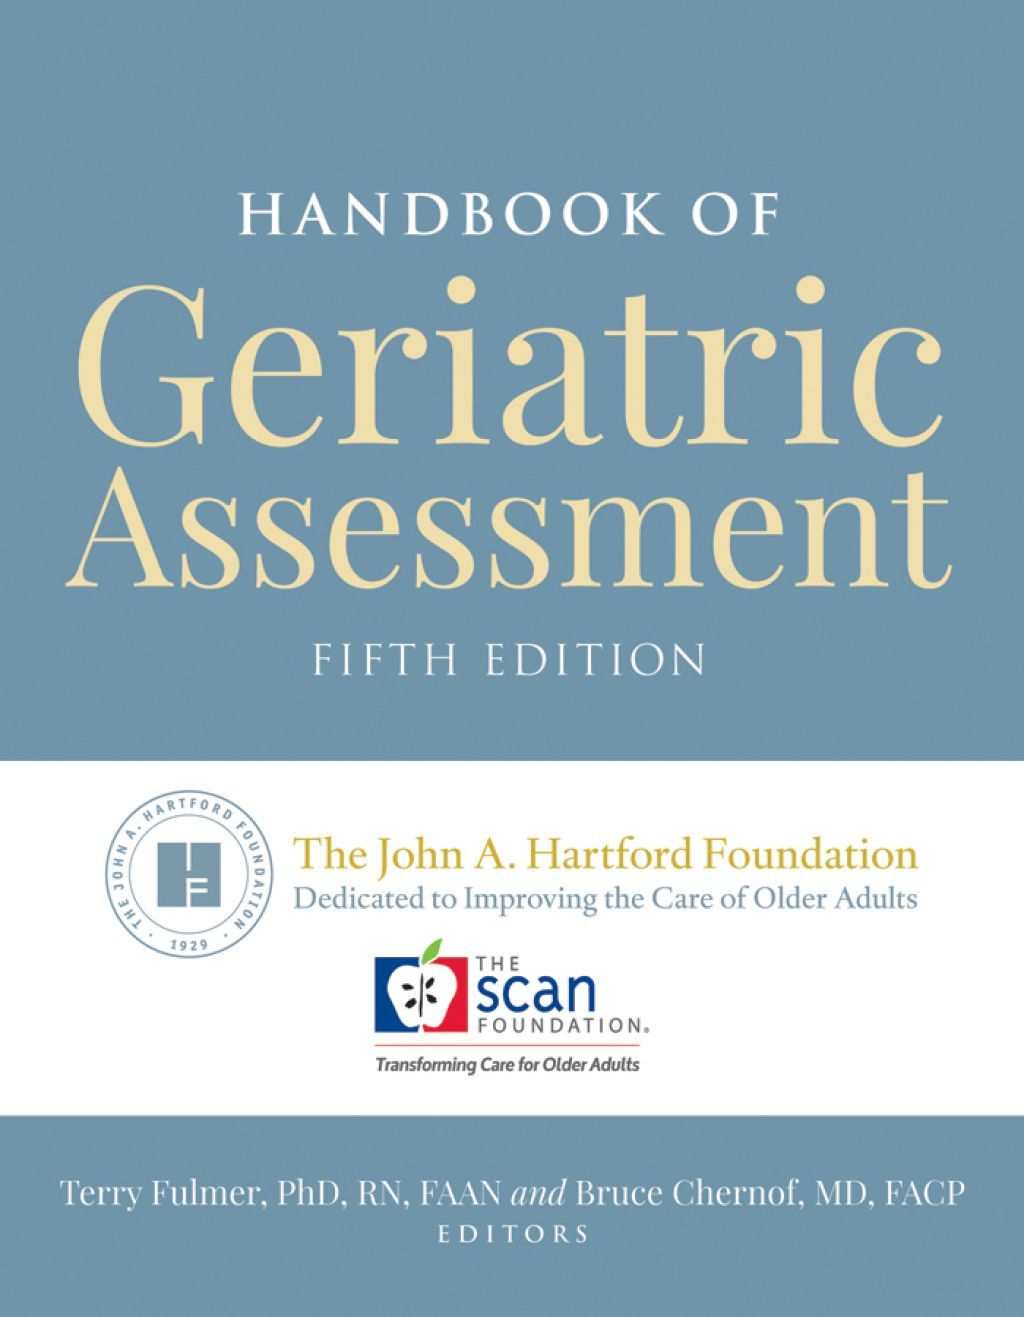 Assessment Ebook Geriatric Handbook Rental Rossmann Handbook Of Geriatric Assessment Ebook Rental In 2020 Geriatric Assessment Advanced Care